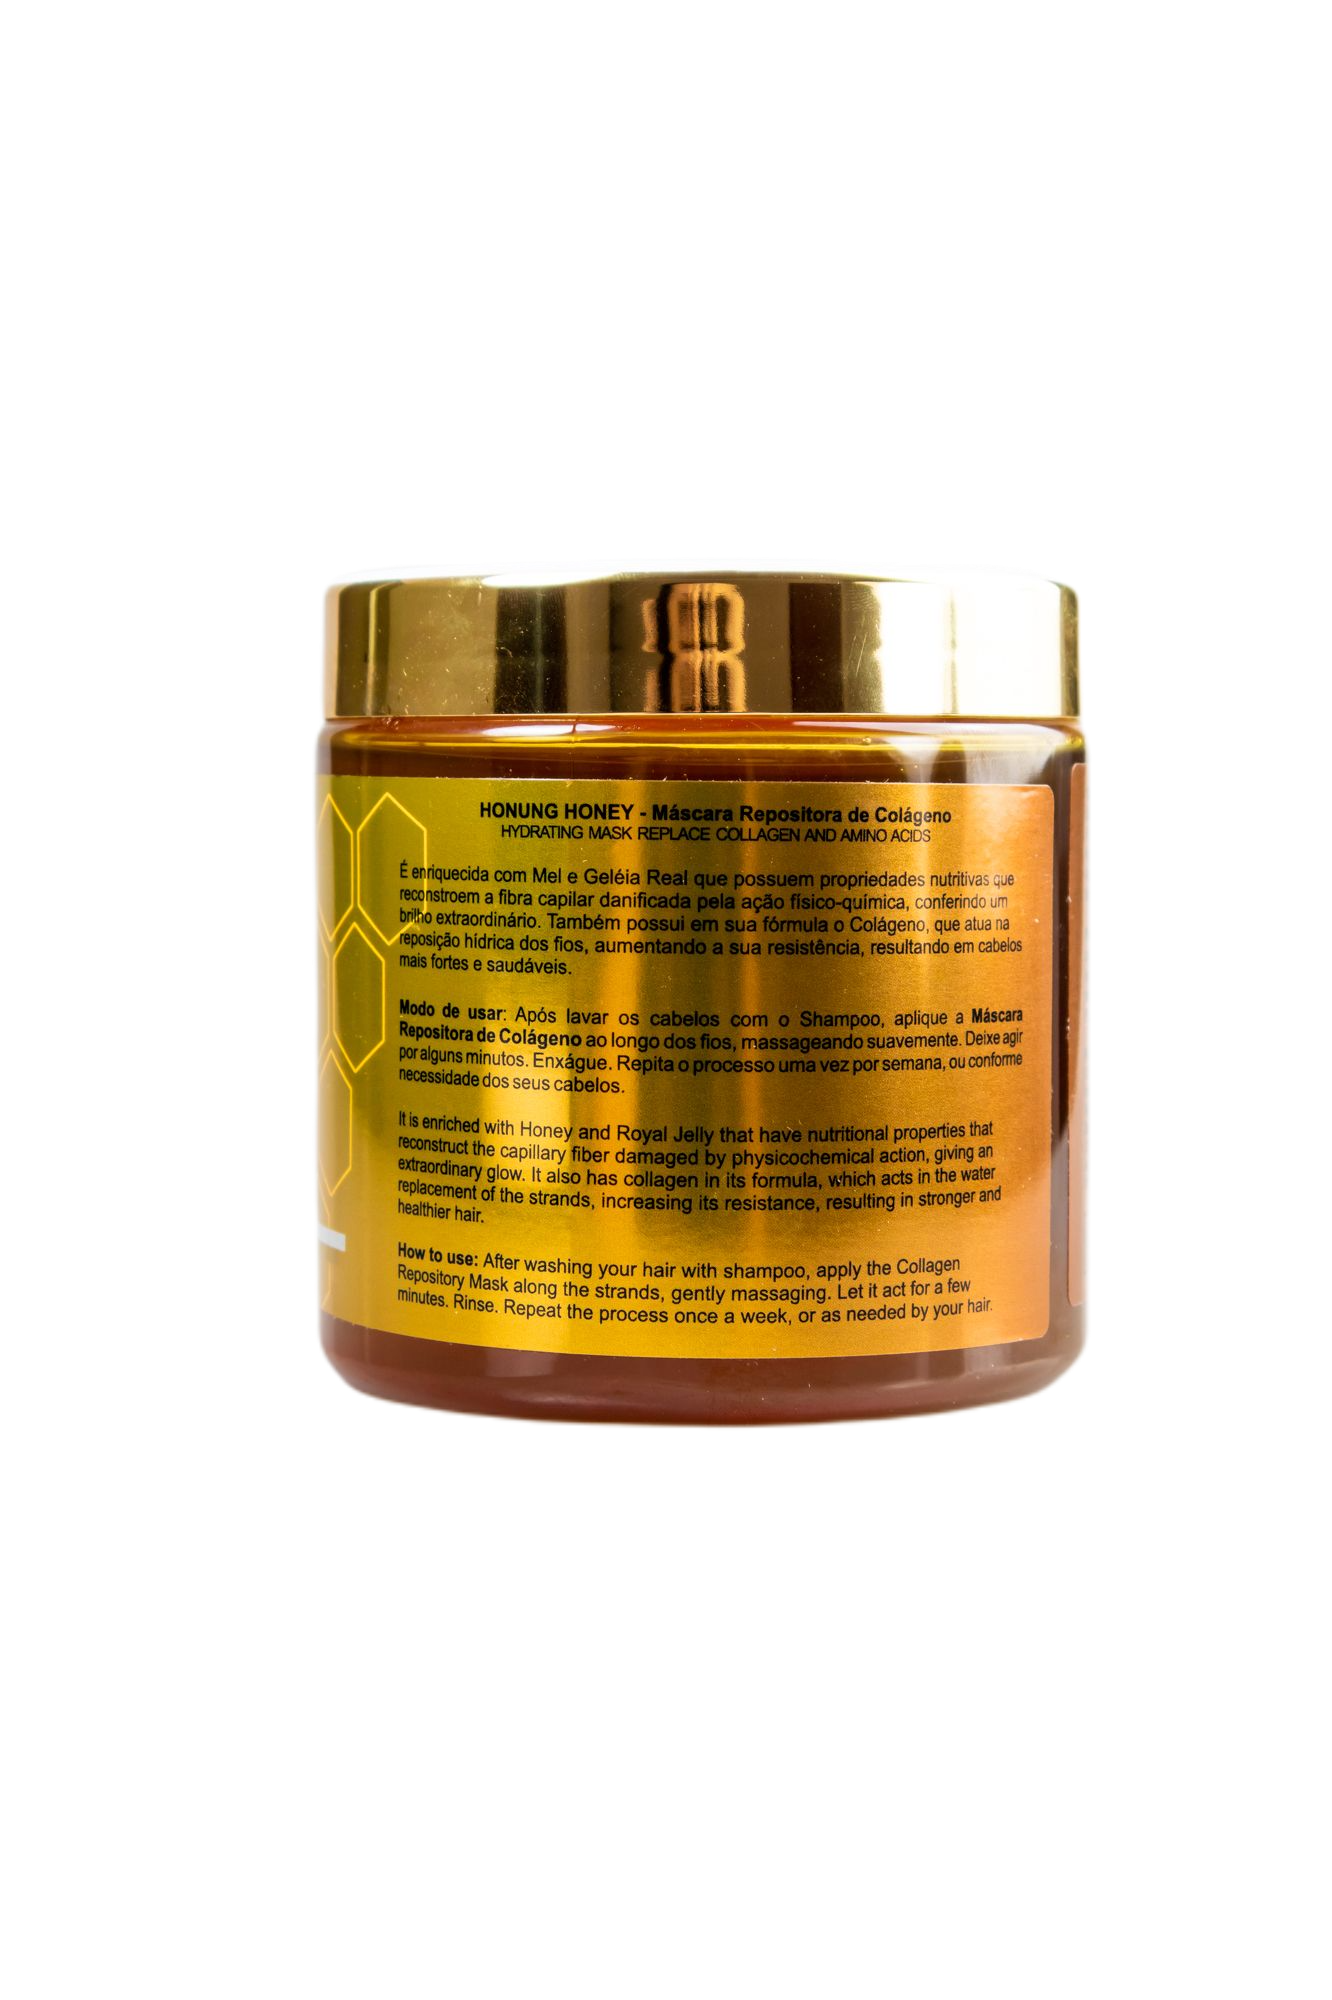 Tyrrel Hair Mask Luxury Treatment Honung Honey Royal Jelly Collagen Repository Mask 500g - Tyrrel